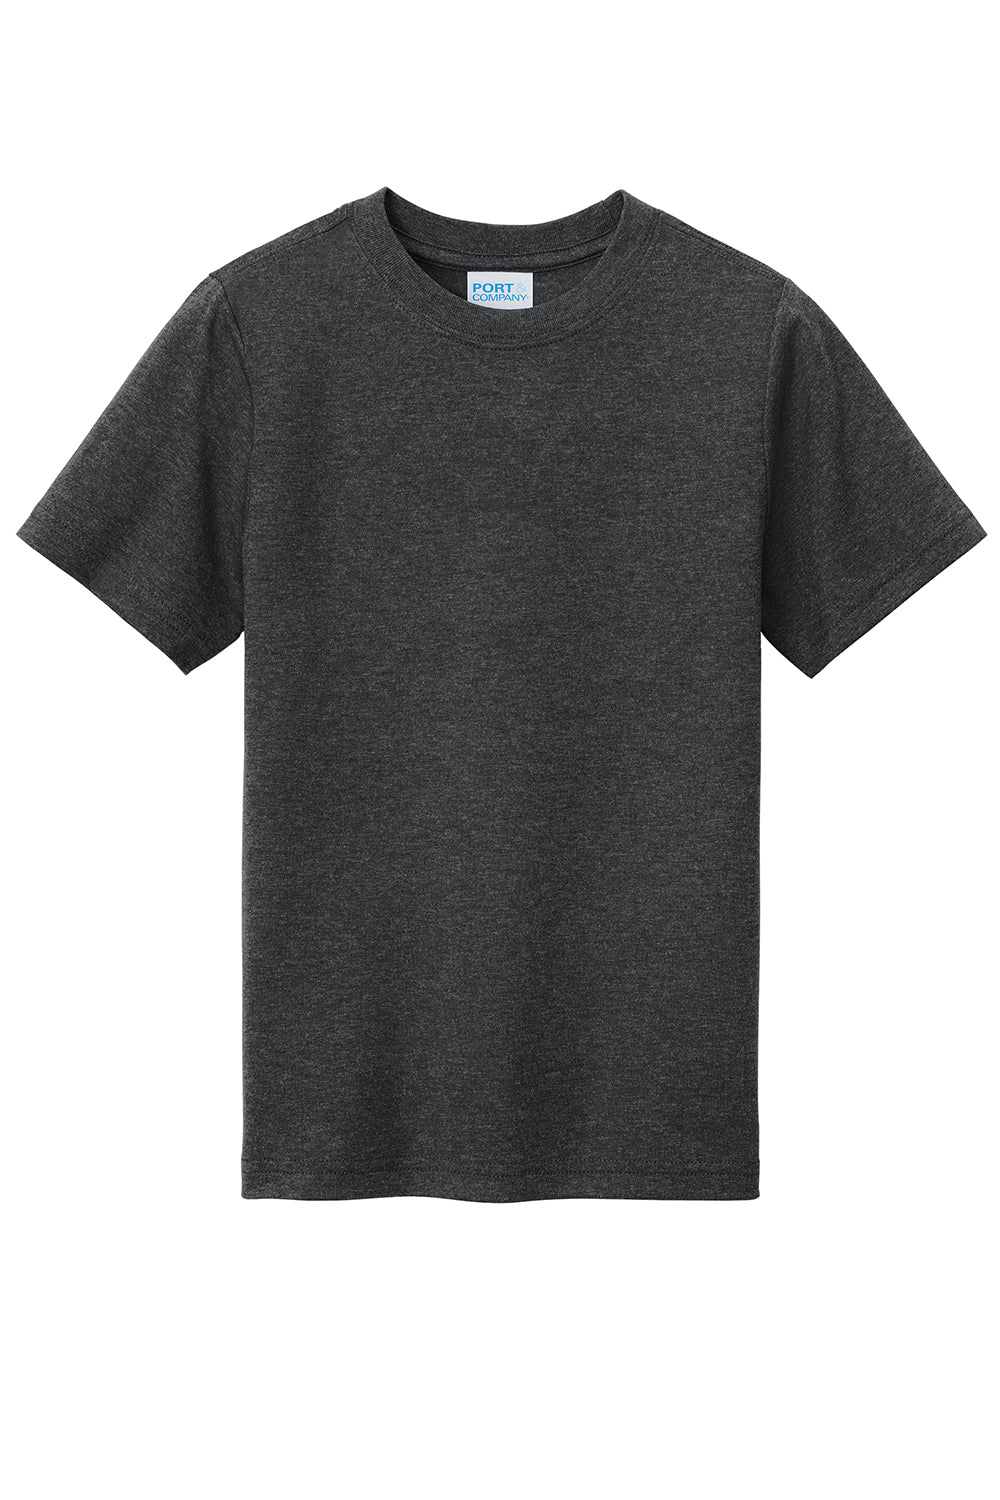 Port & Company PC330Y Youth Short Sleeve Crewneck T-Shirt Heather Black Flat Front